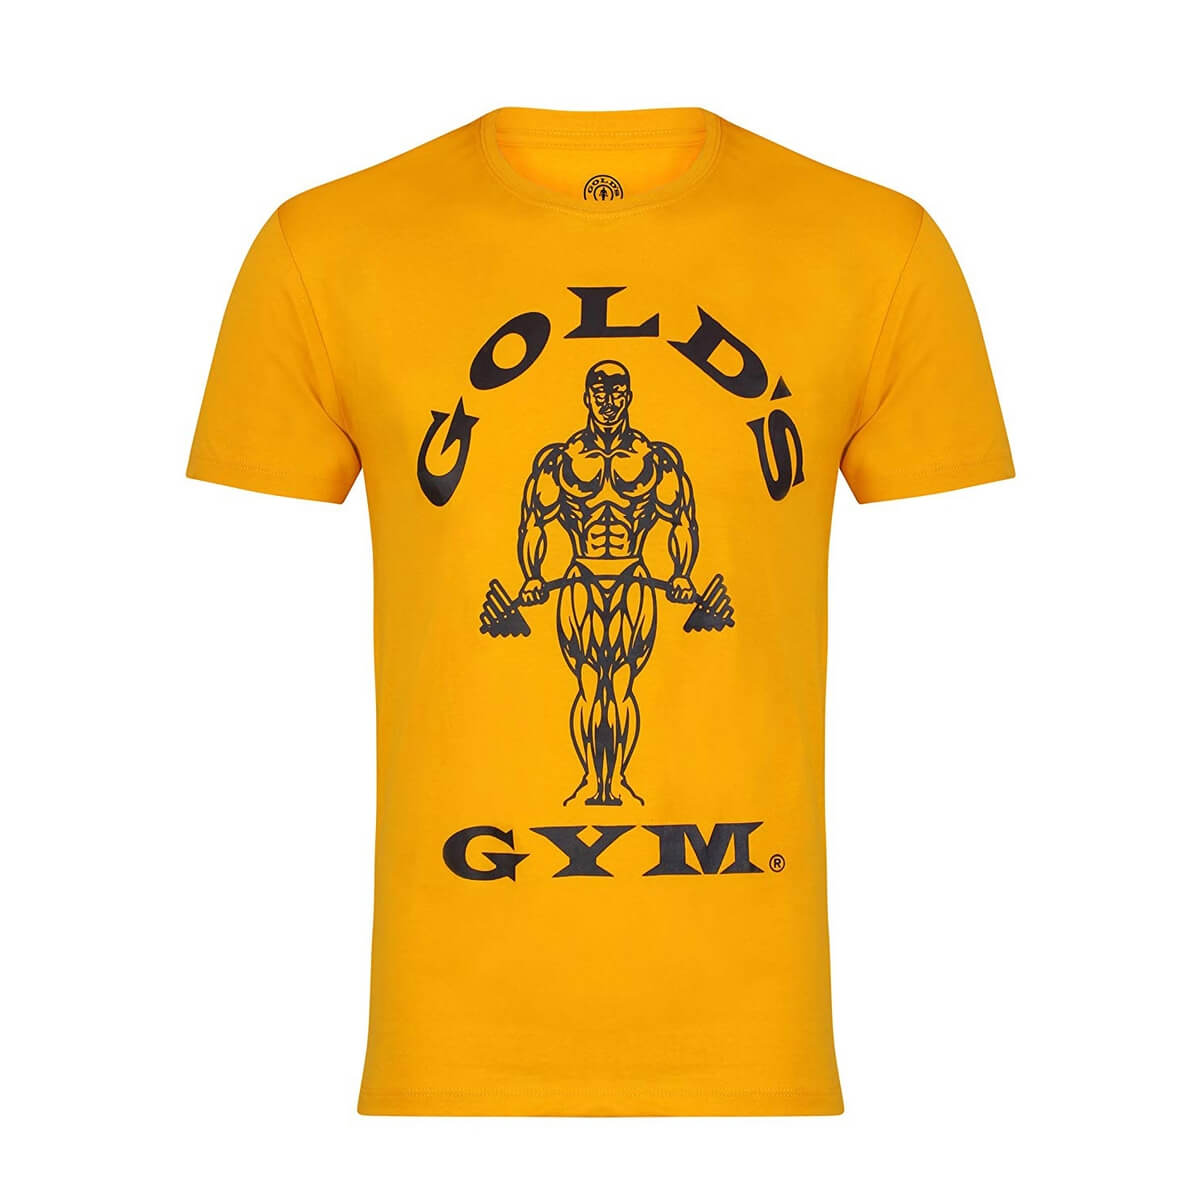 Kolla in Muscle Joe T-Shirt, gold, Gold's Gym hos SportGymButiken.se